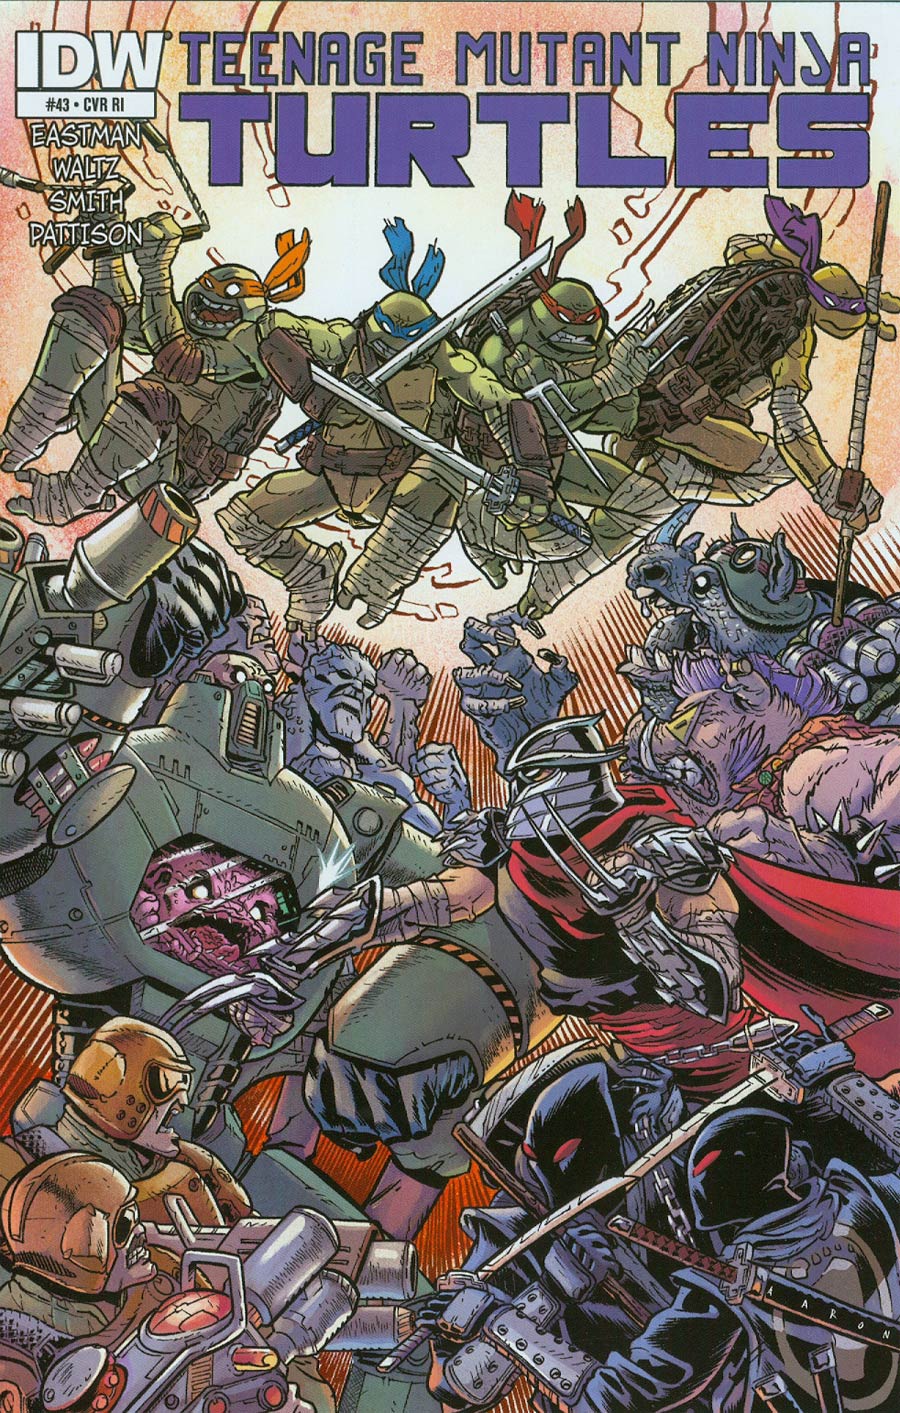 Teenage Mutant Ninja Turtles Vol 5 #43 Cover C Incentive Aaron Conley Variant Cover